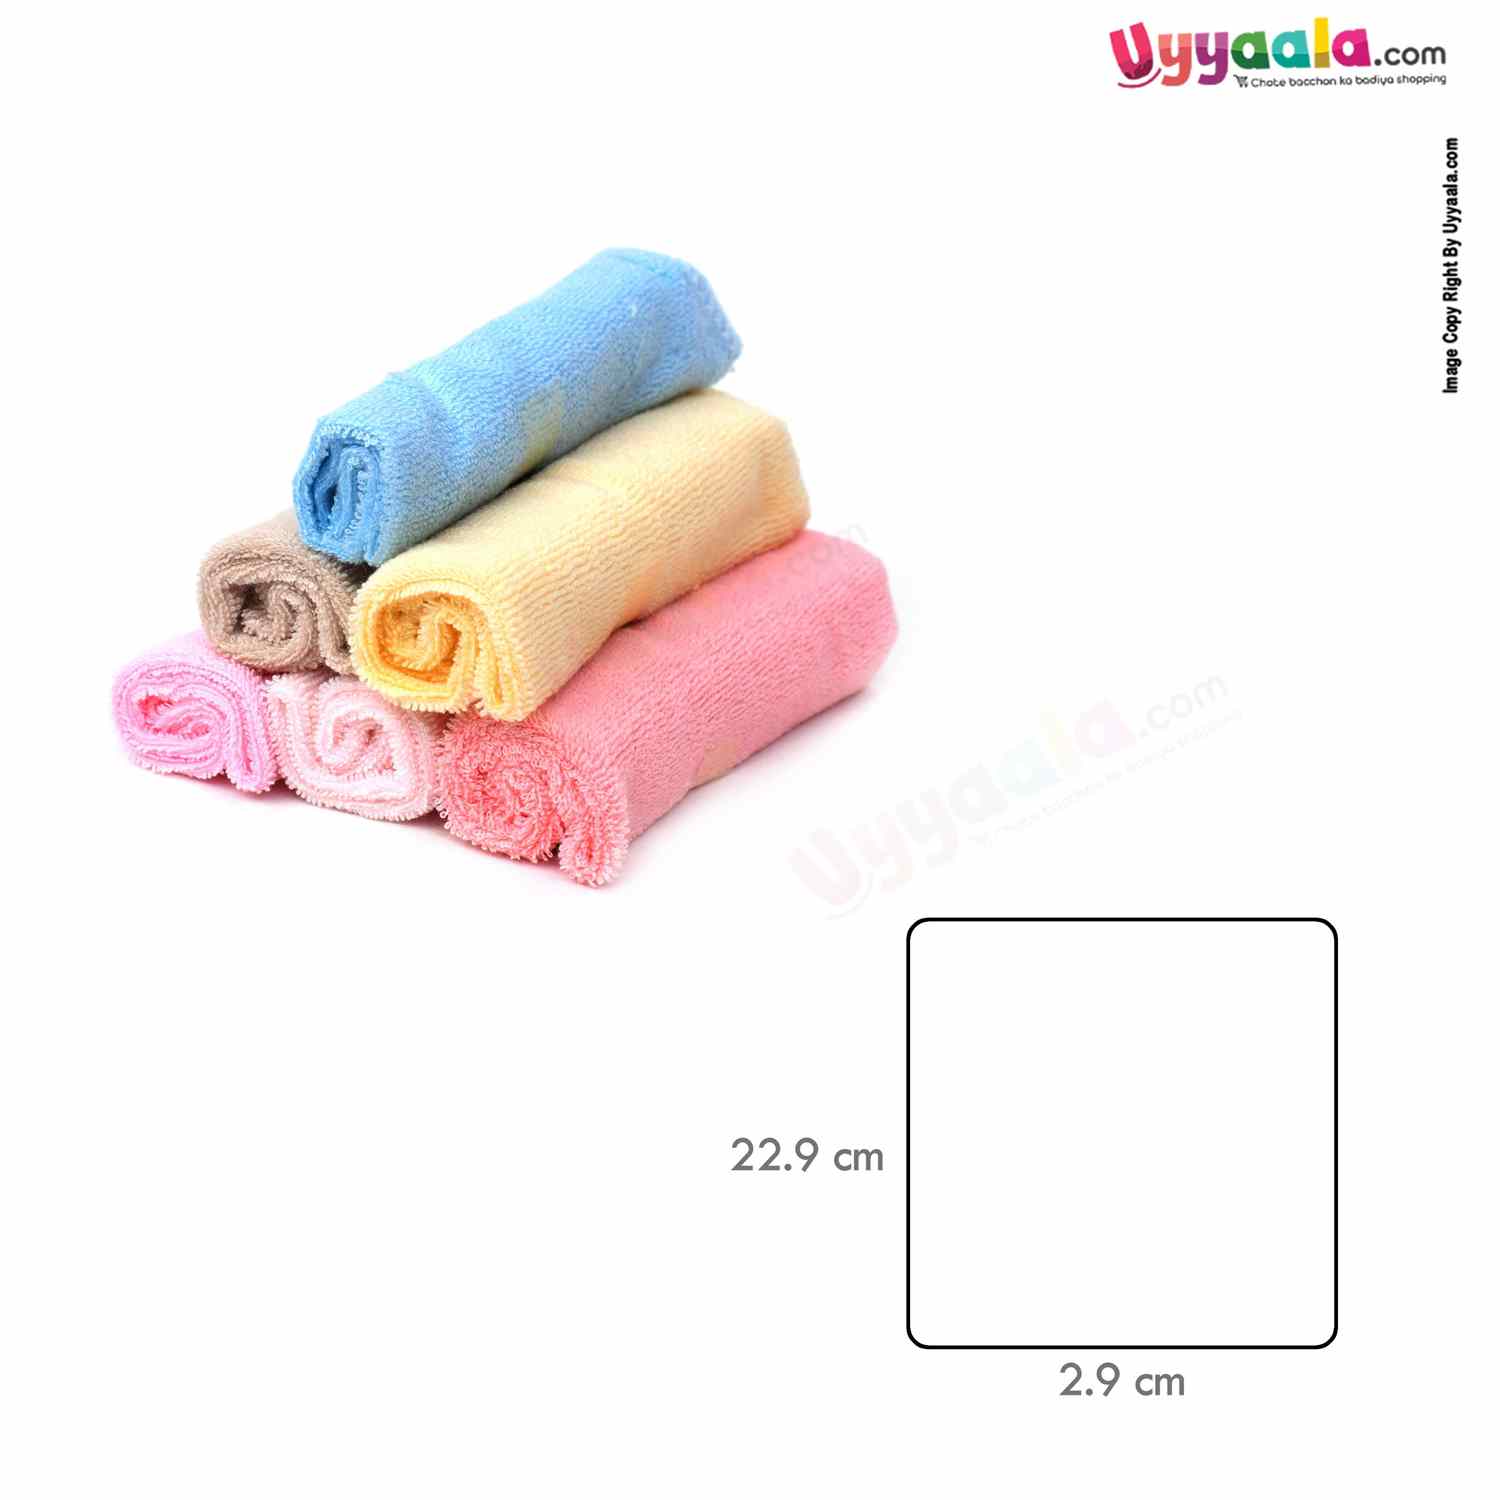 Soft washable cloth napkins for babies